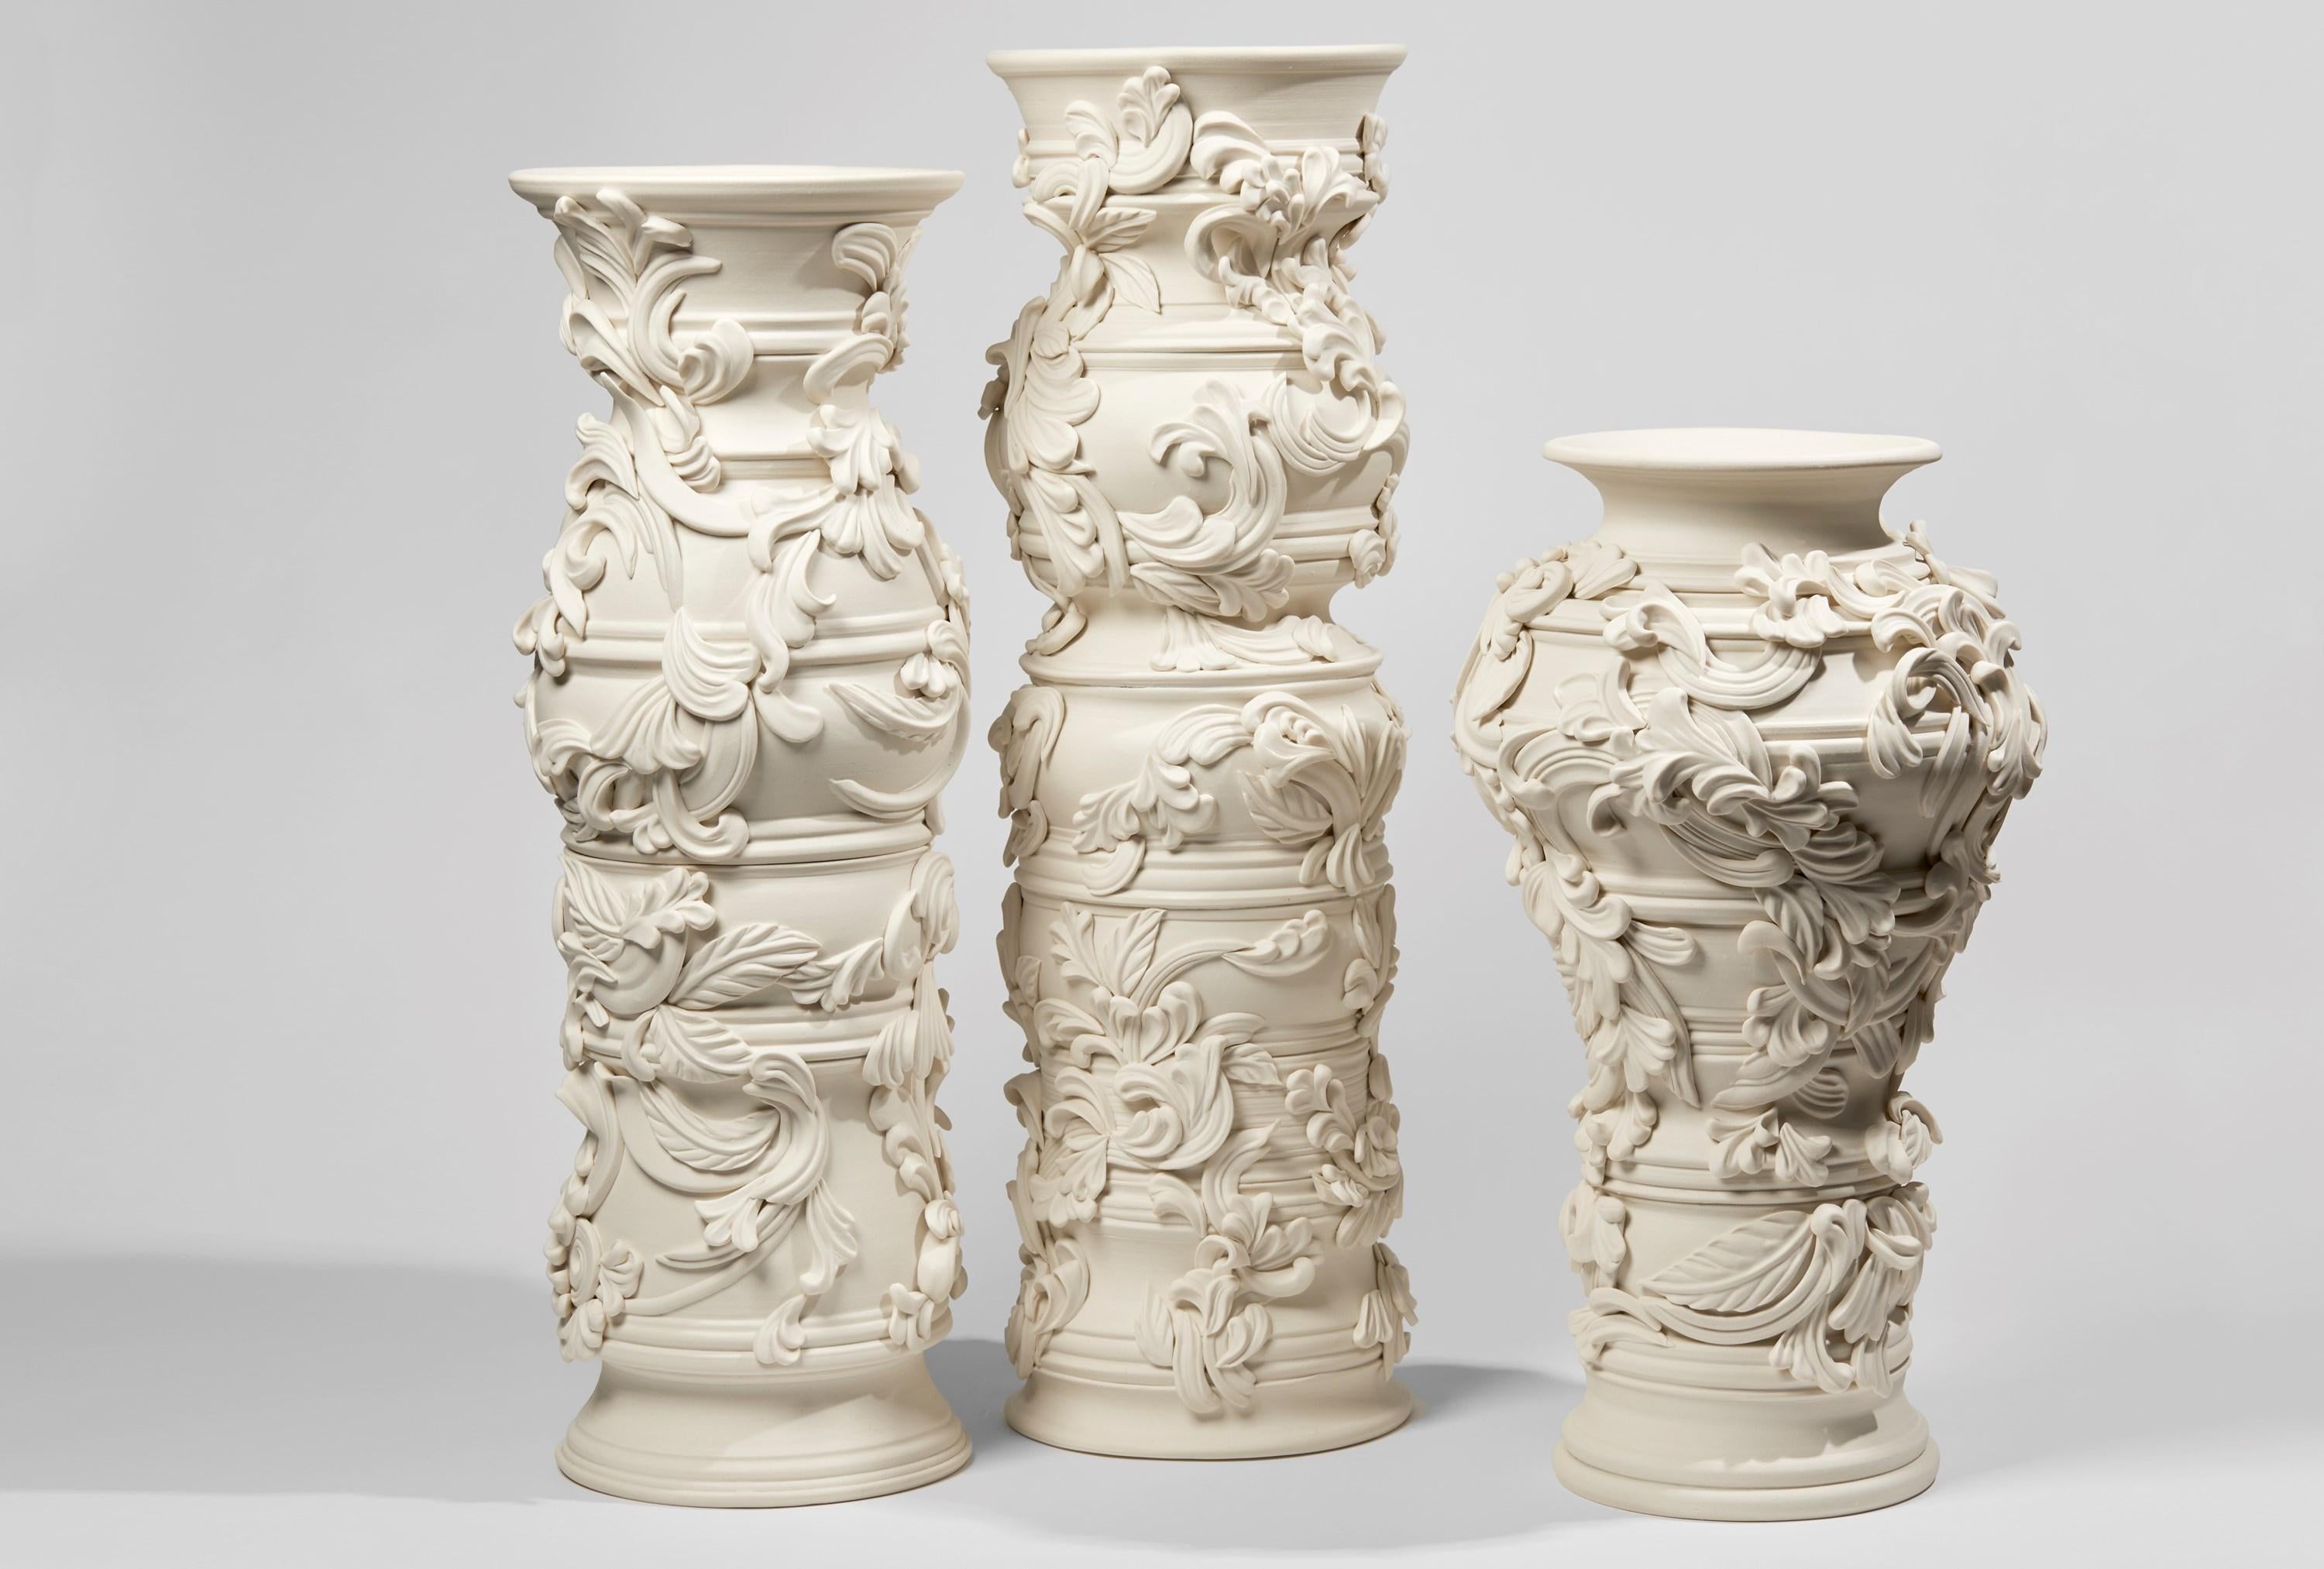 British  Promenade V, a Unique Ceramic Sculptural Tall Vase in Porcelain by Jo Taylor For Sale